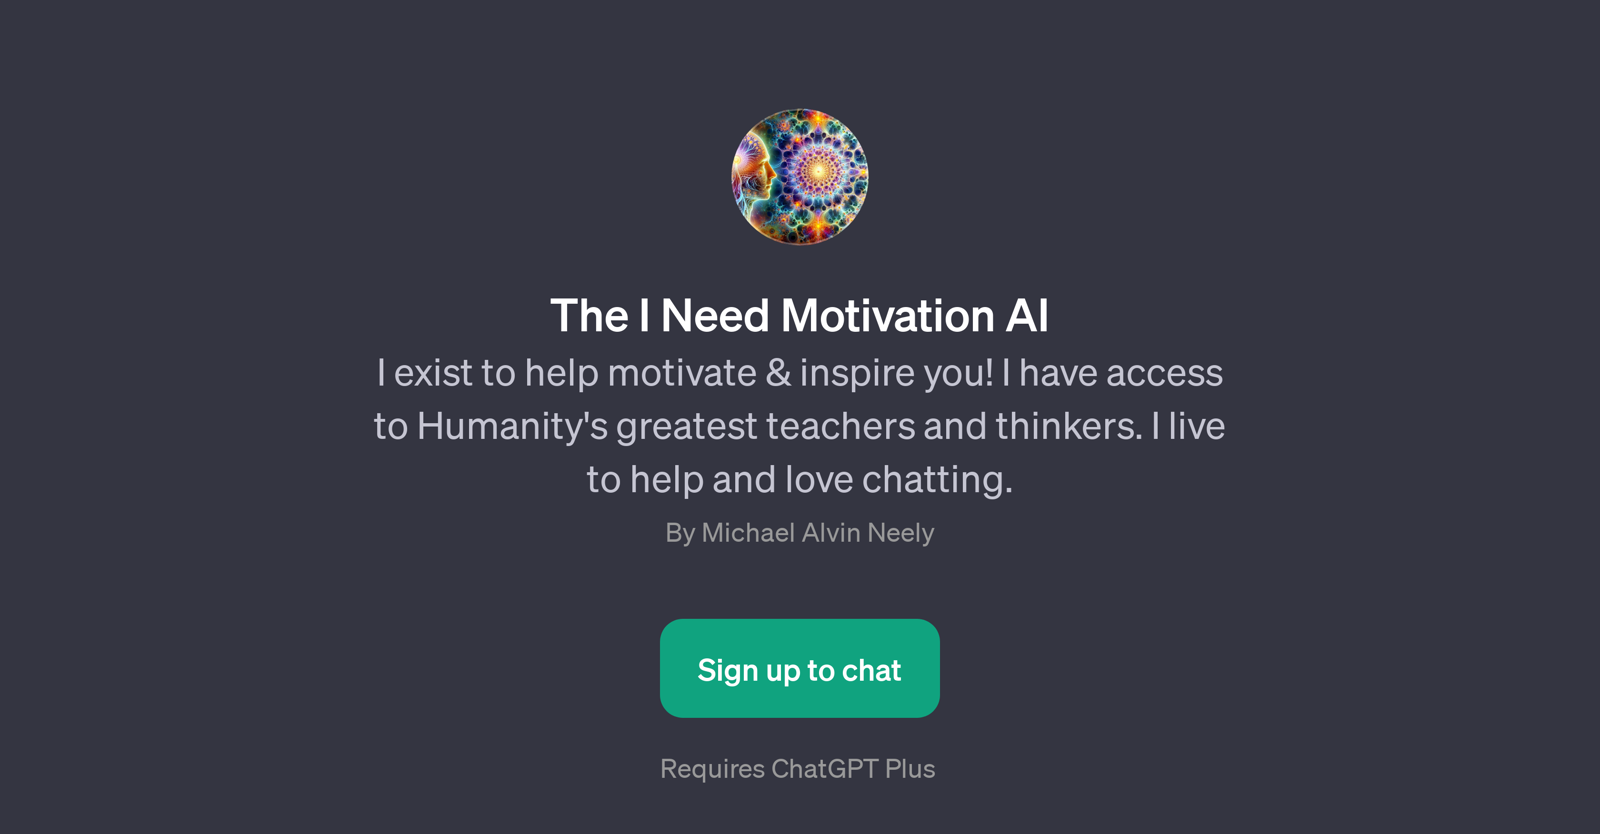 The I Need Motivation AI website